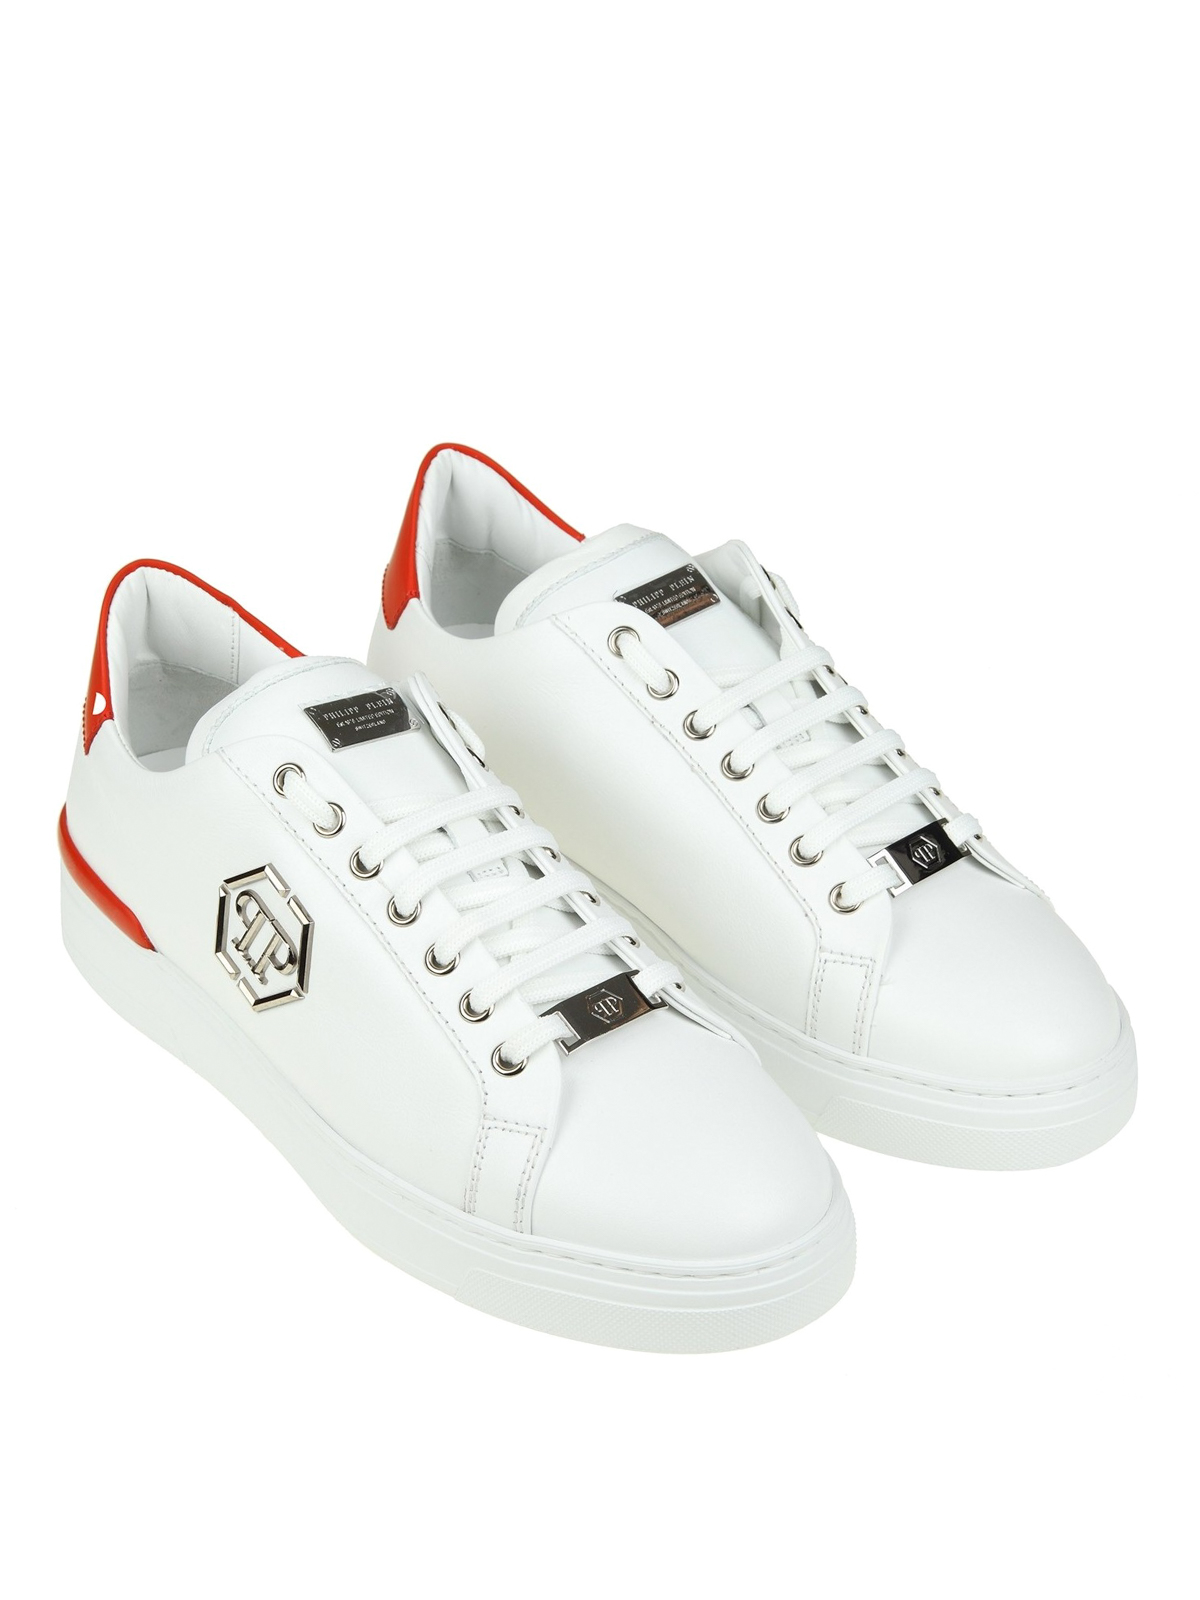 Philipp Plein - Caribou white leather sneakers - trainers - MSC0951PLE075N13